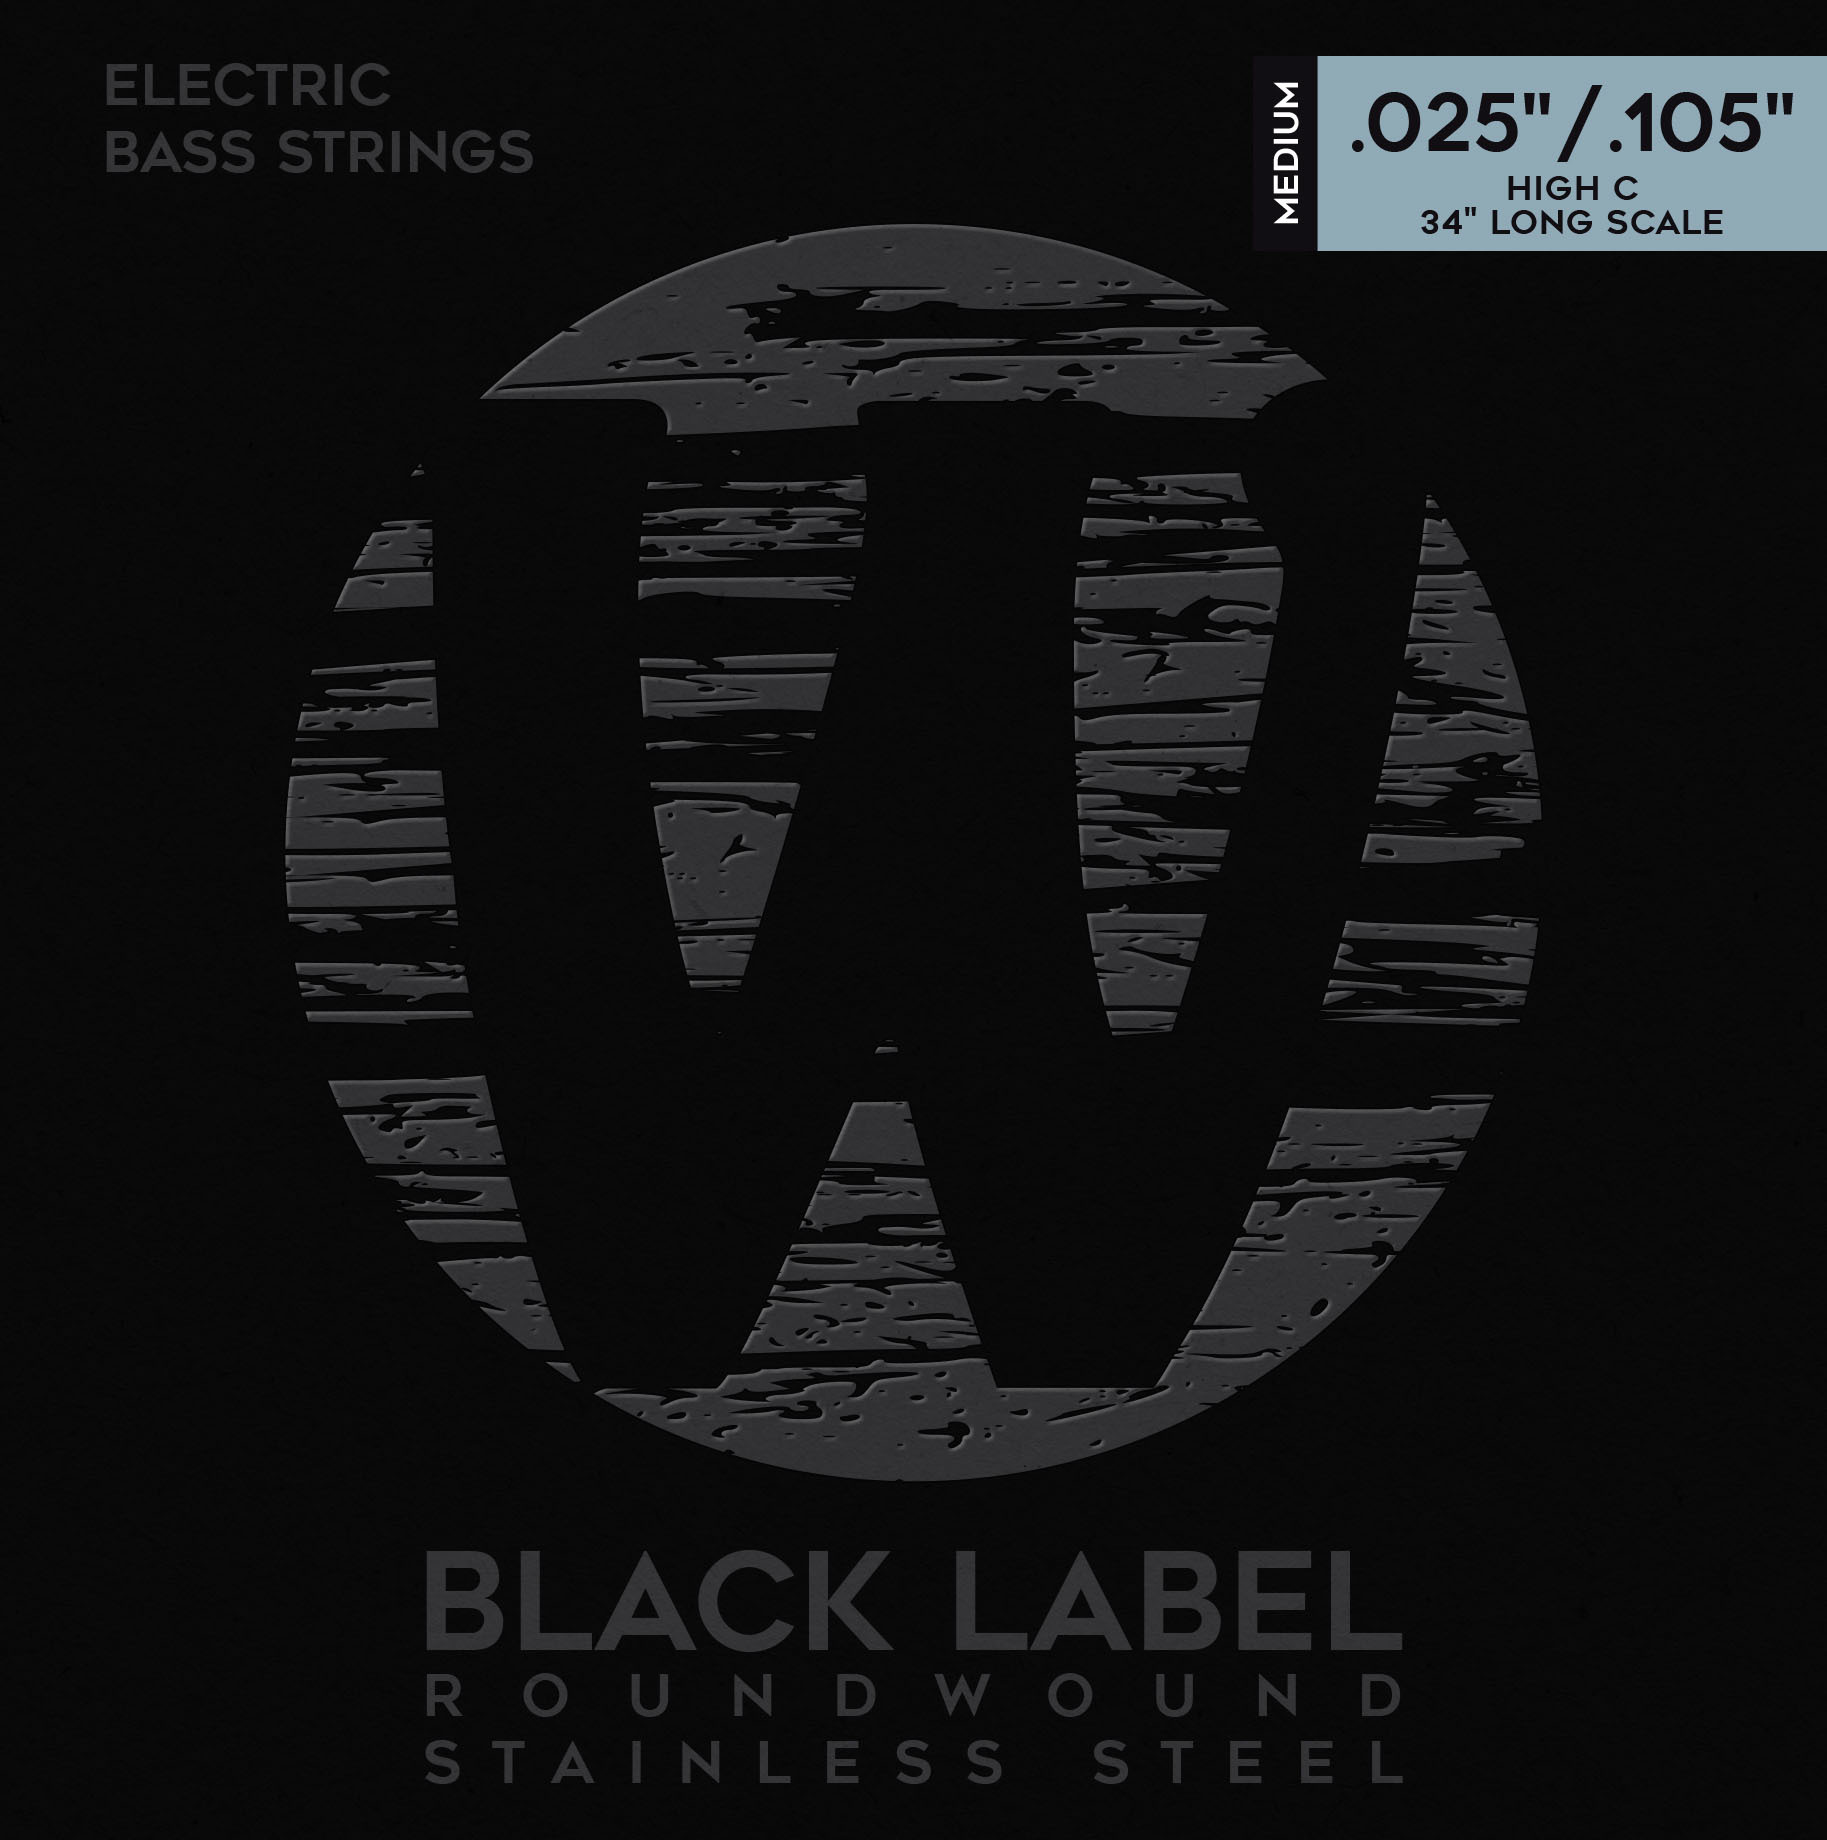 Warwick Black Label Bass String Set, Stainless Steel - 5-String, High C, Medium, .025-.105